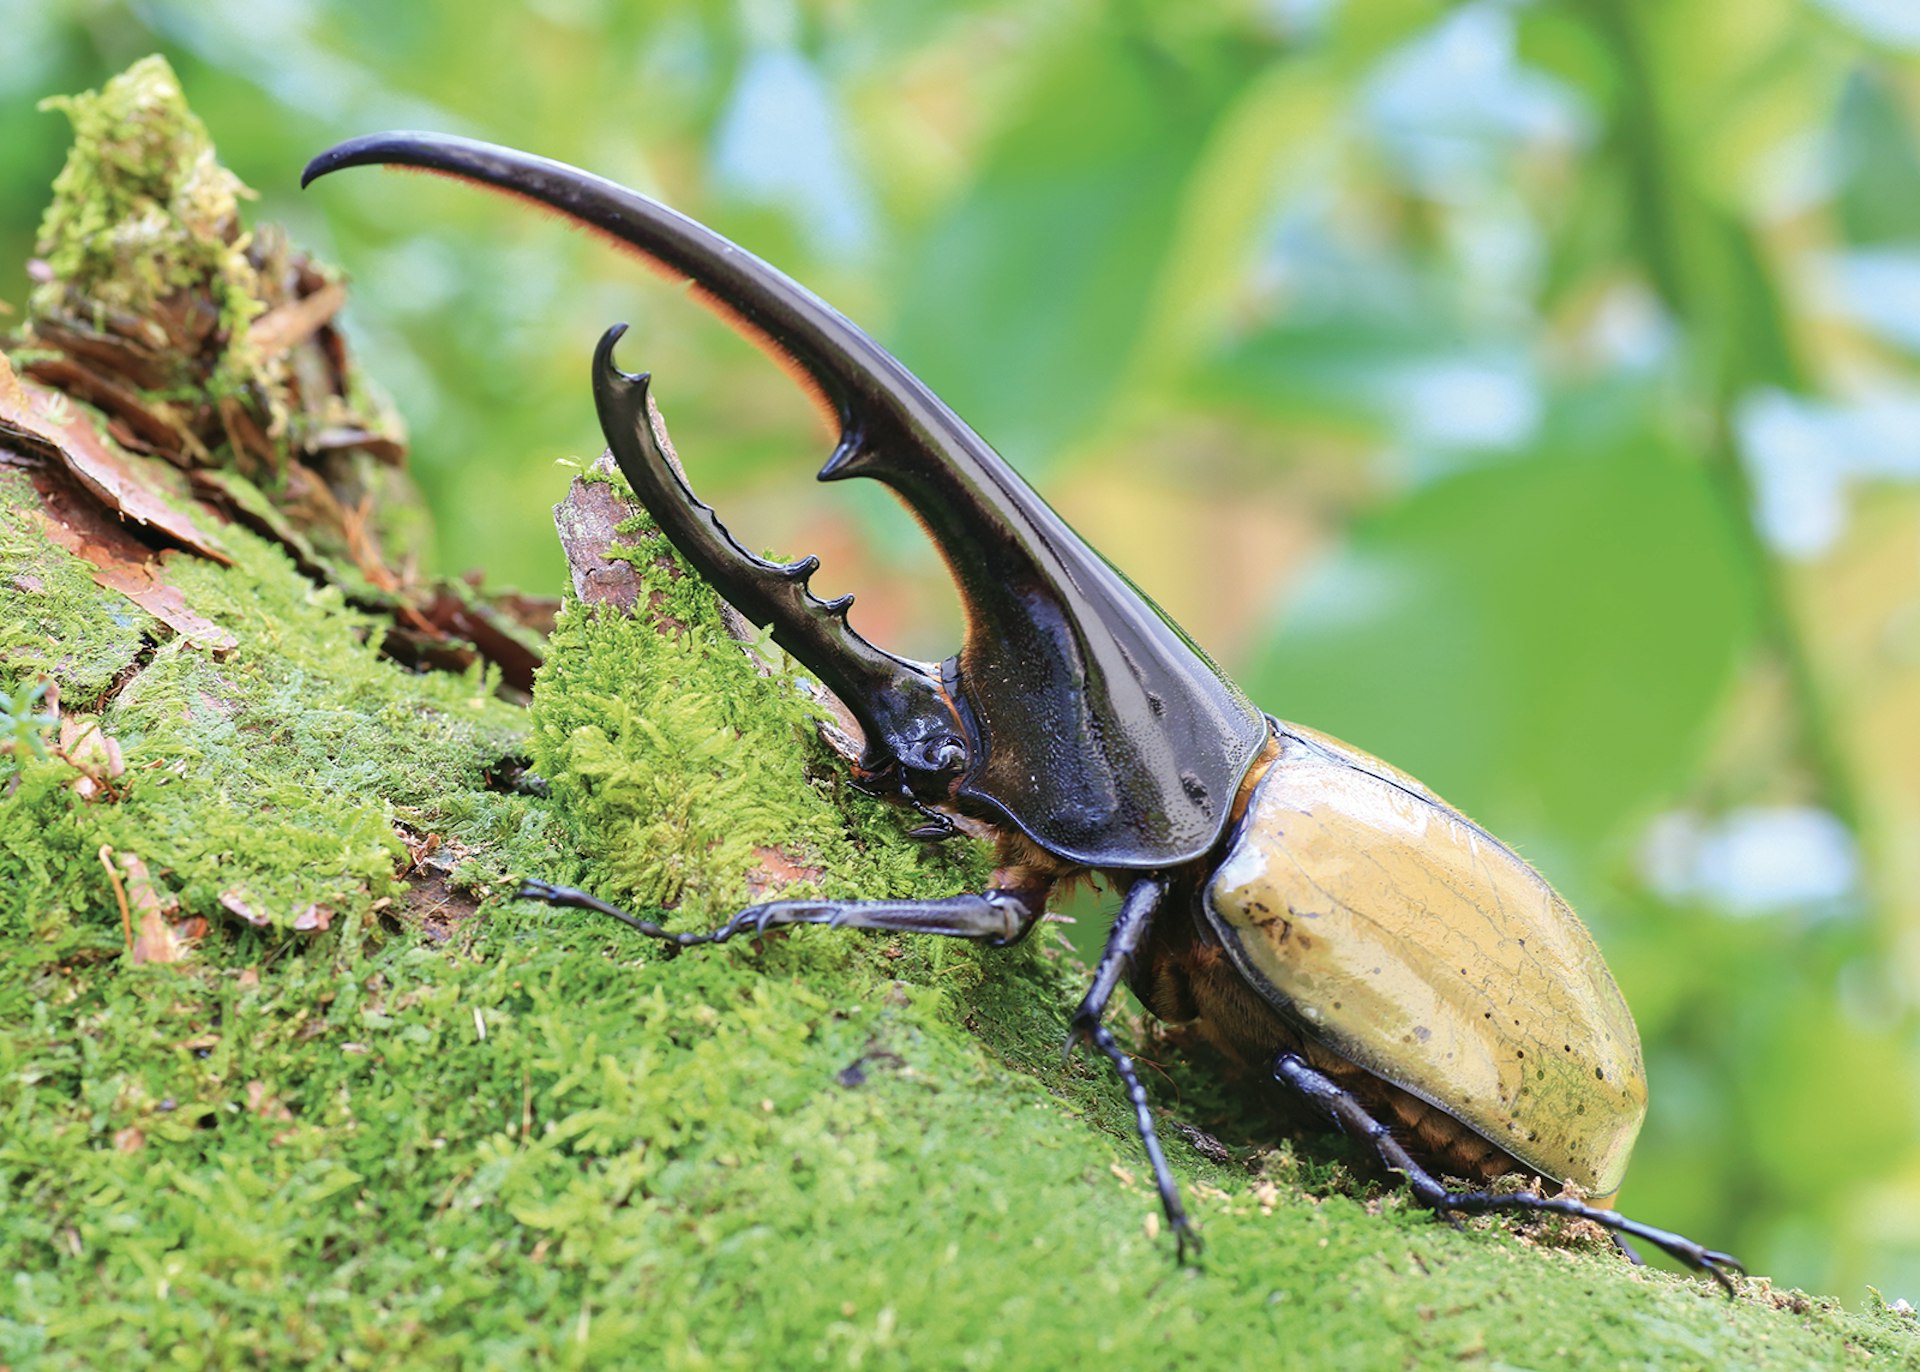 A Hercules beetle